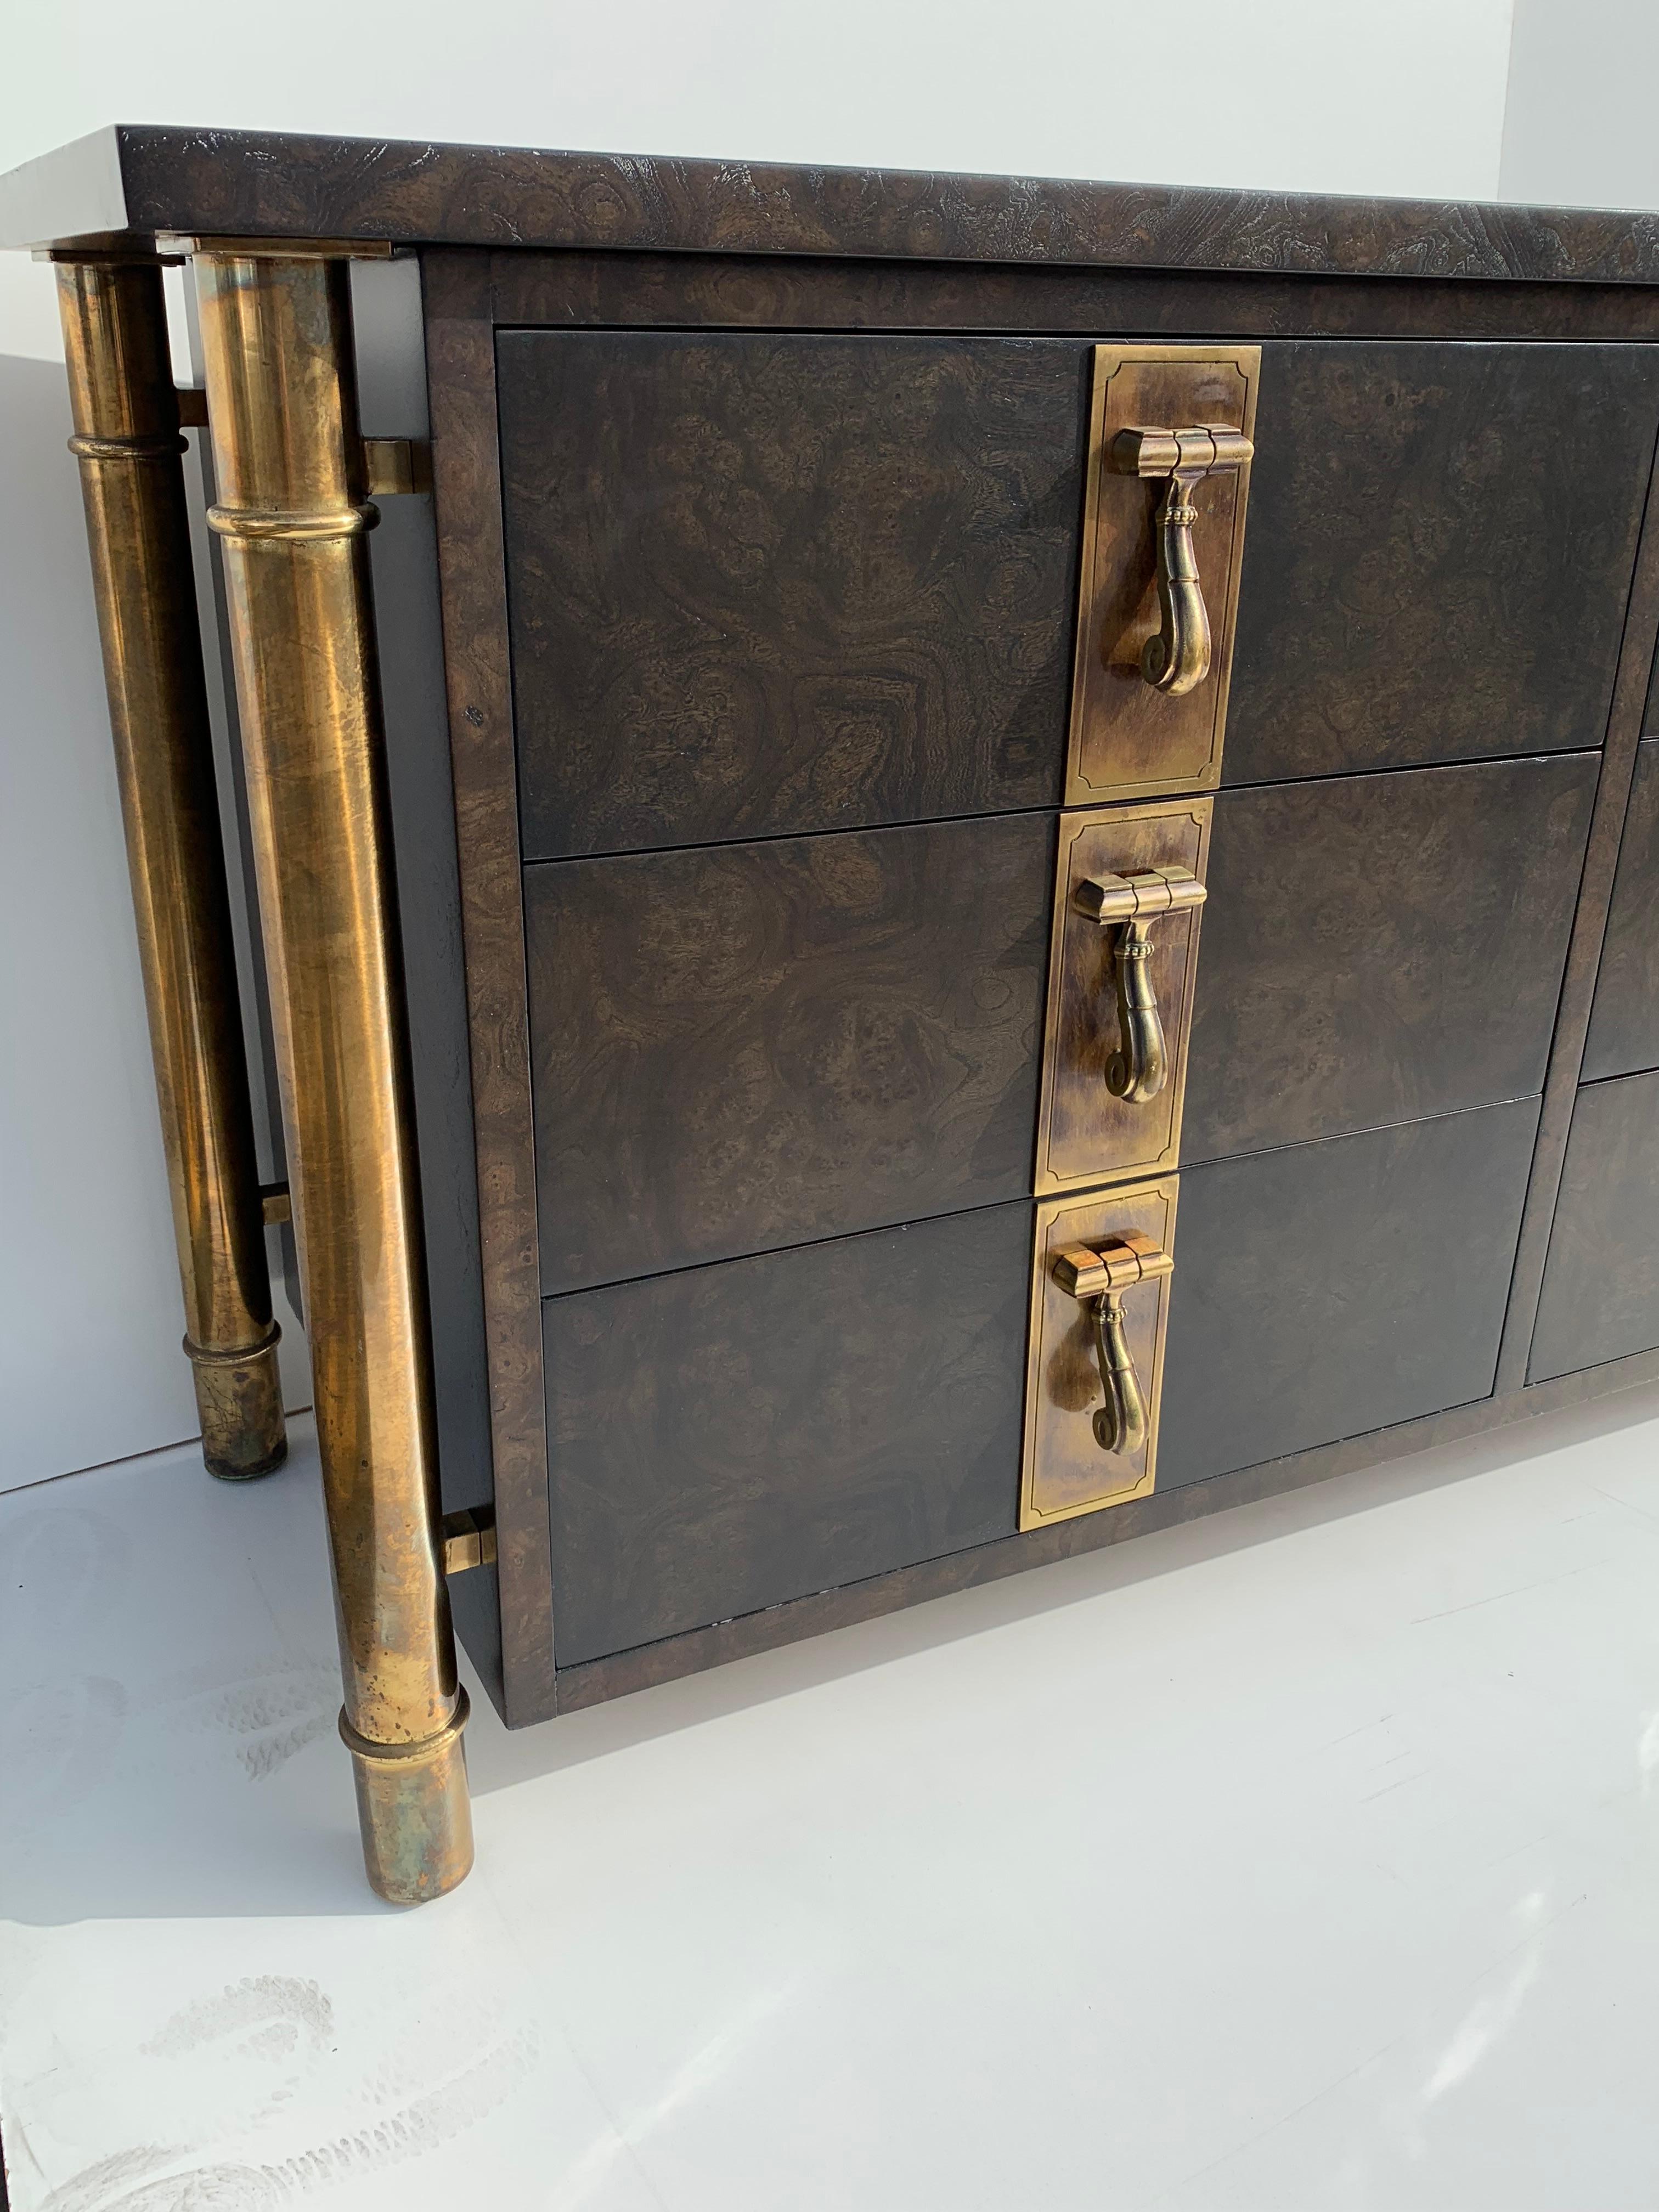 Ebonized burl wood Mastercraft nine-drawer dresser with antique brass hardware and legs.